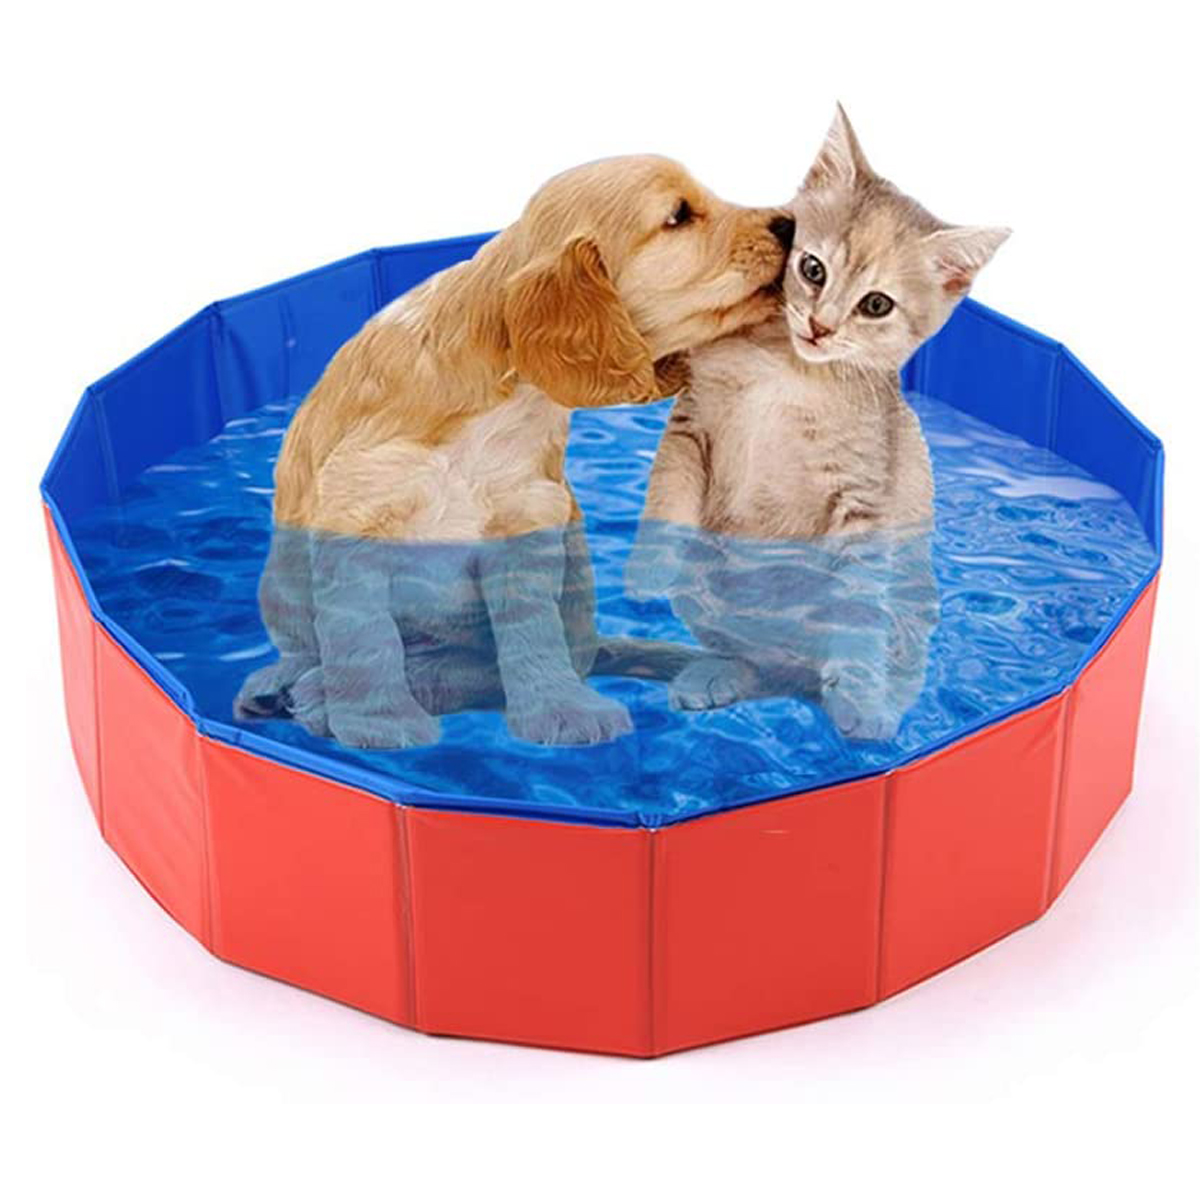 160cm-Foldable-Pet-Bath-Swimming-Pool-Collapsible-Dog-Pool-Pet-Bathing-Tub-Pool-Kiddie-Pool-for-Dogs-1925754-6